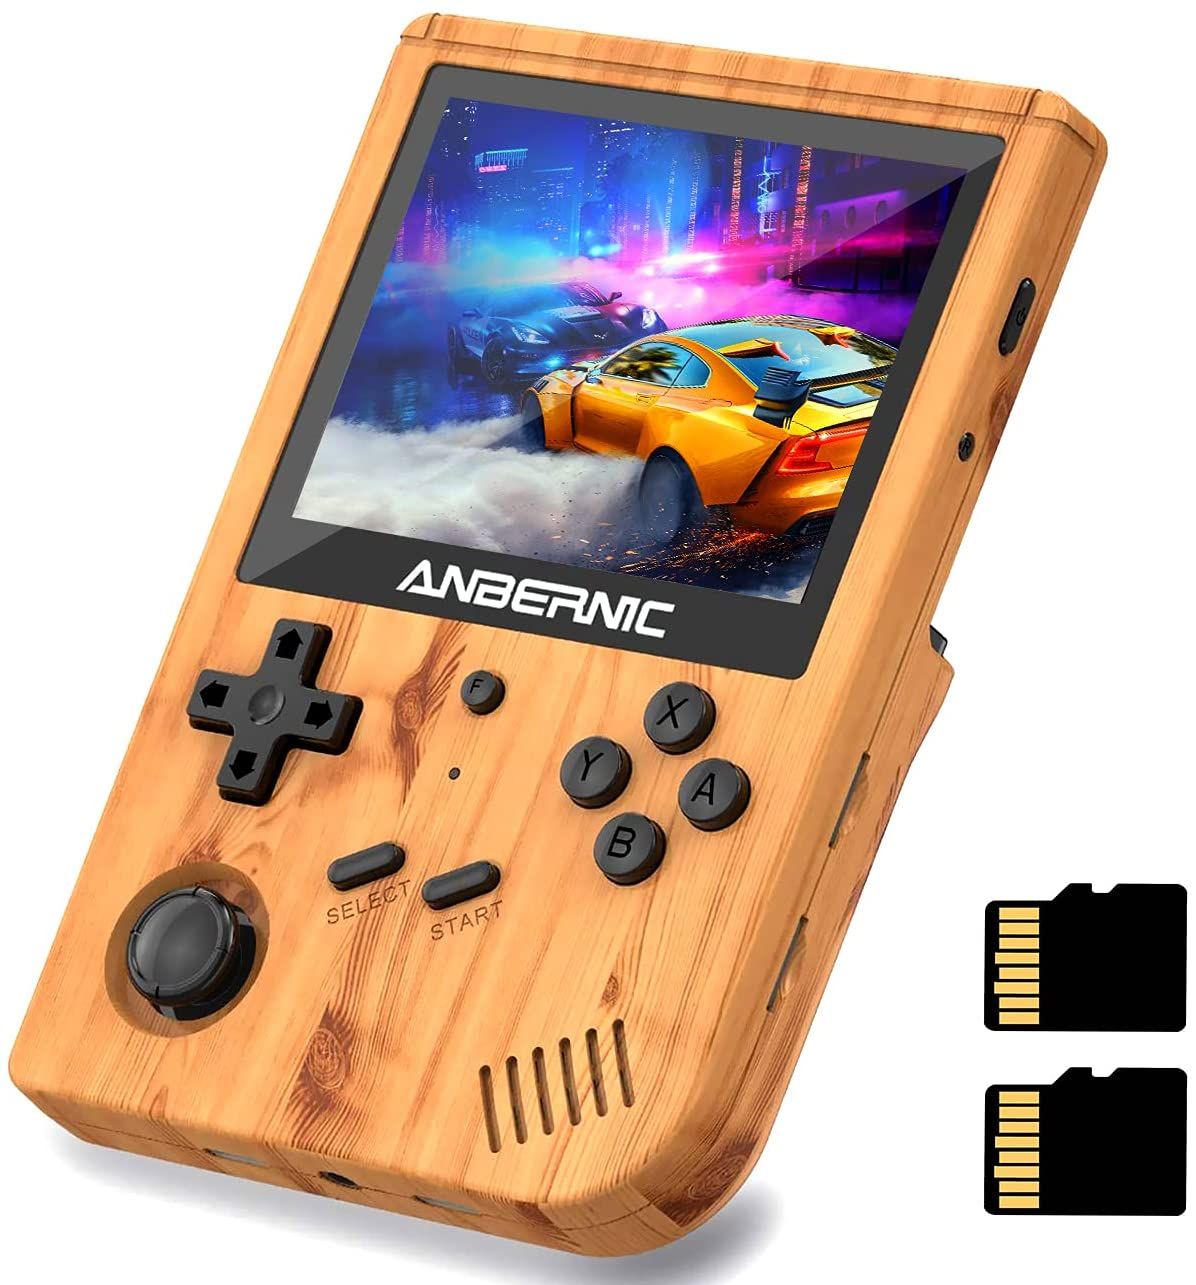 Anbernic RG351V Handheld Game Console wood design